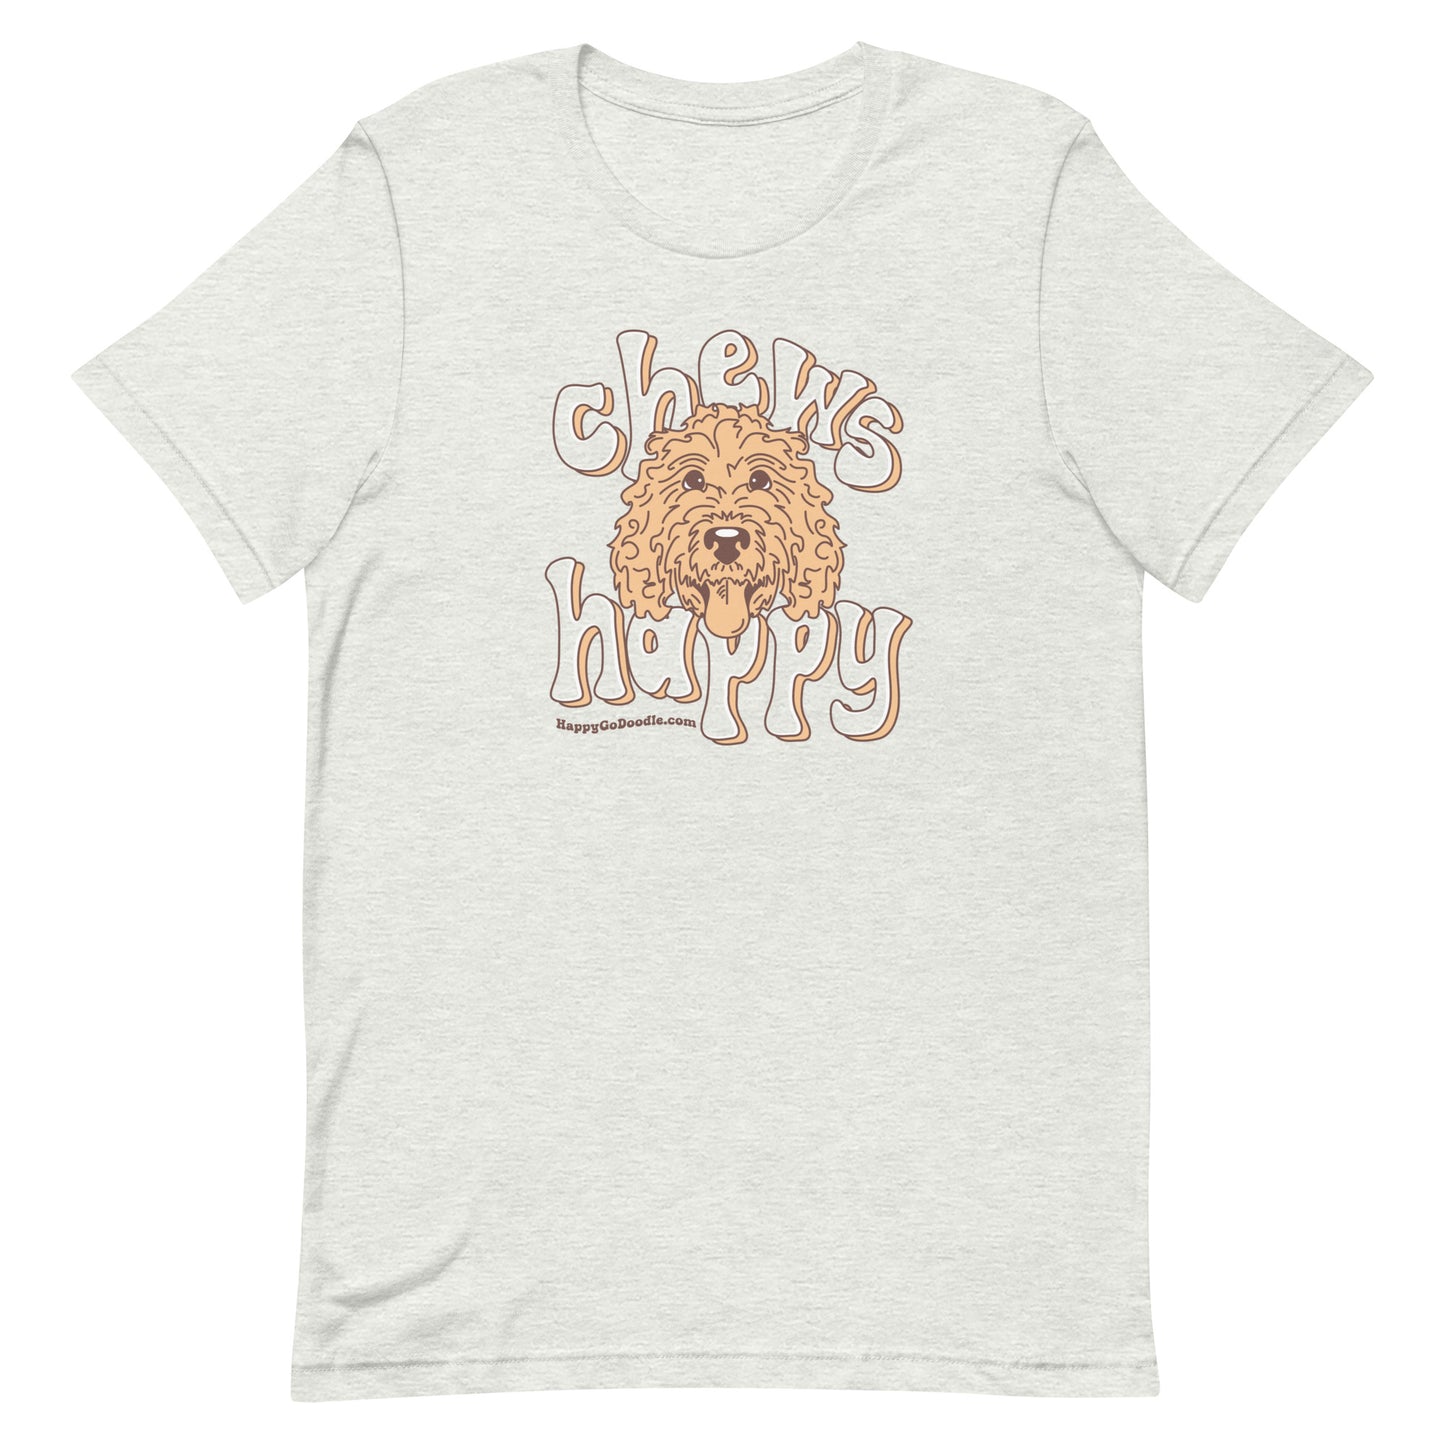 Chews Happy T-Shirt